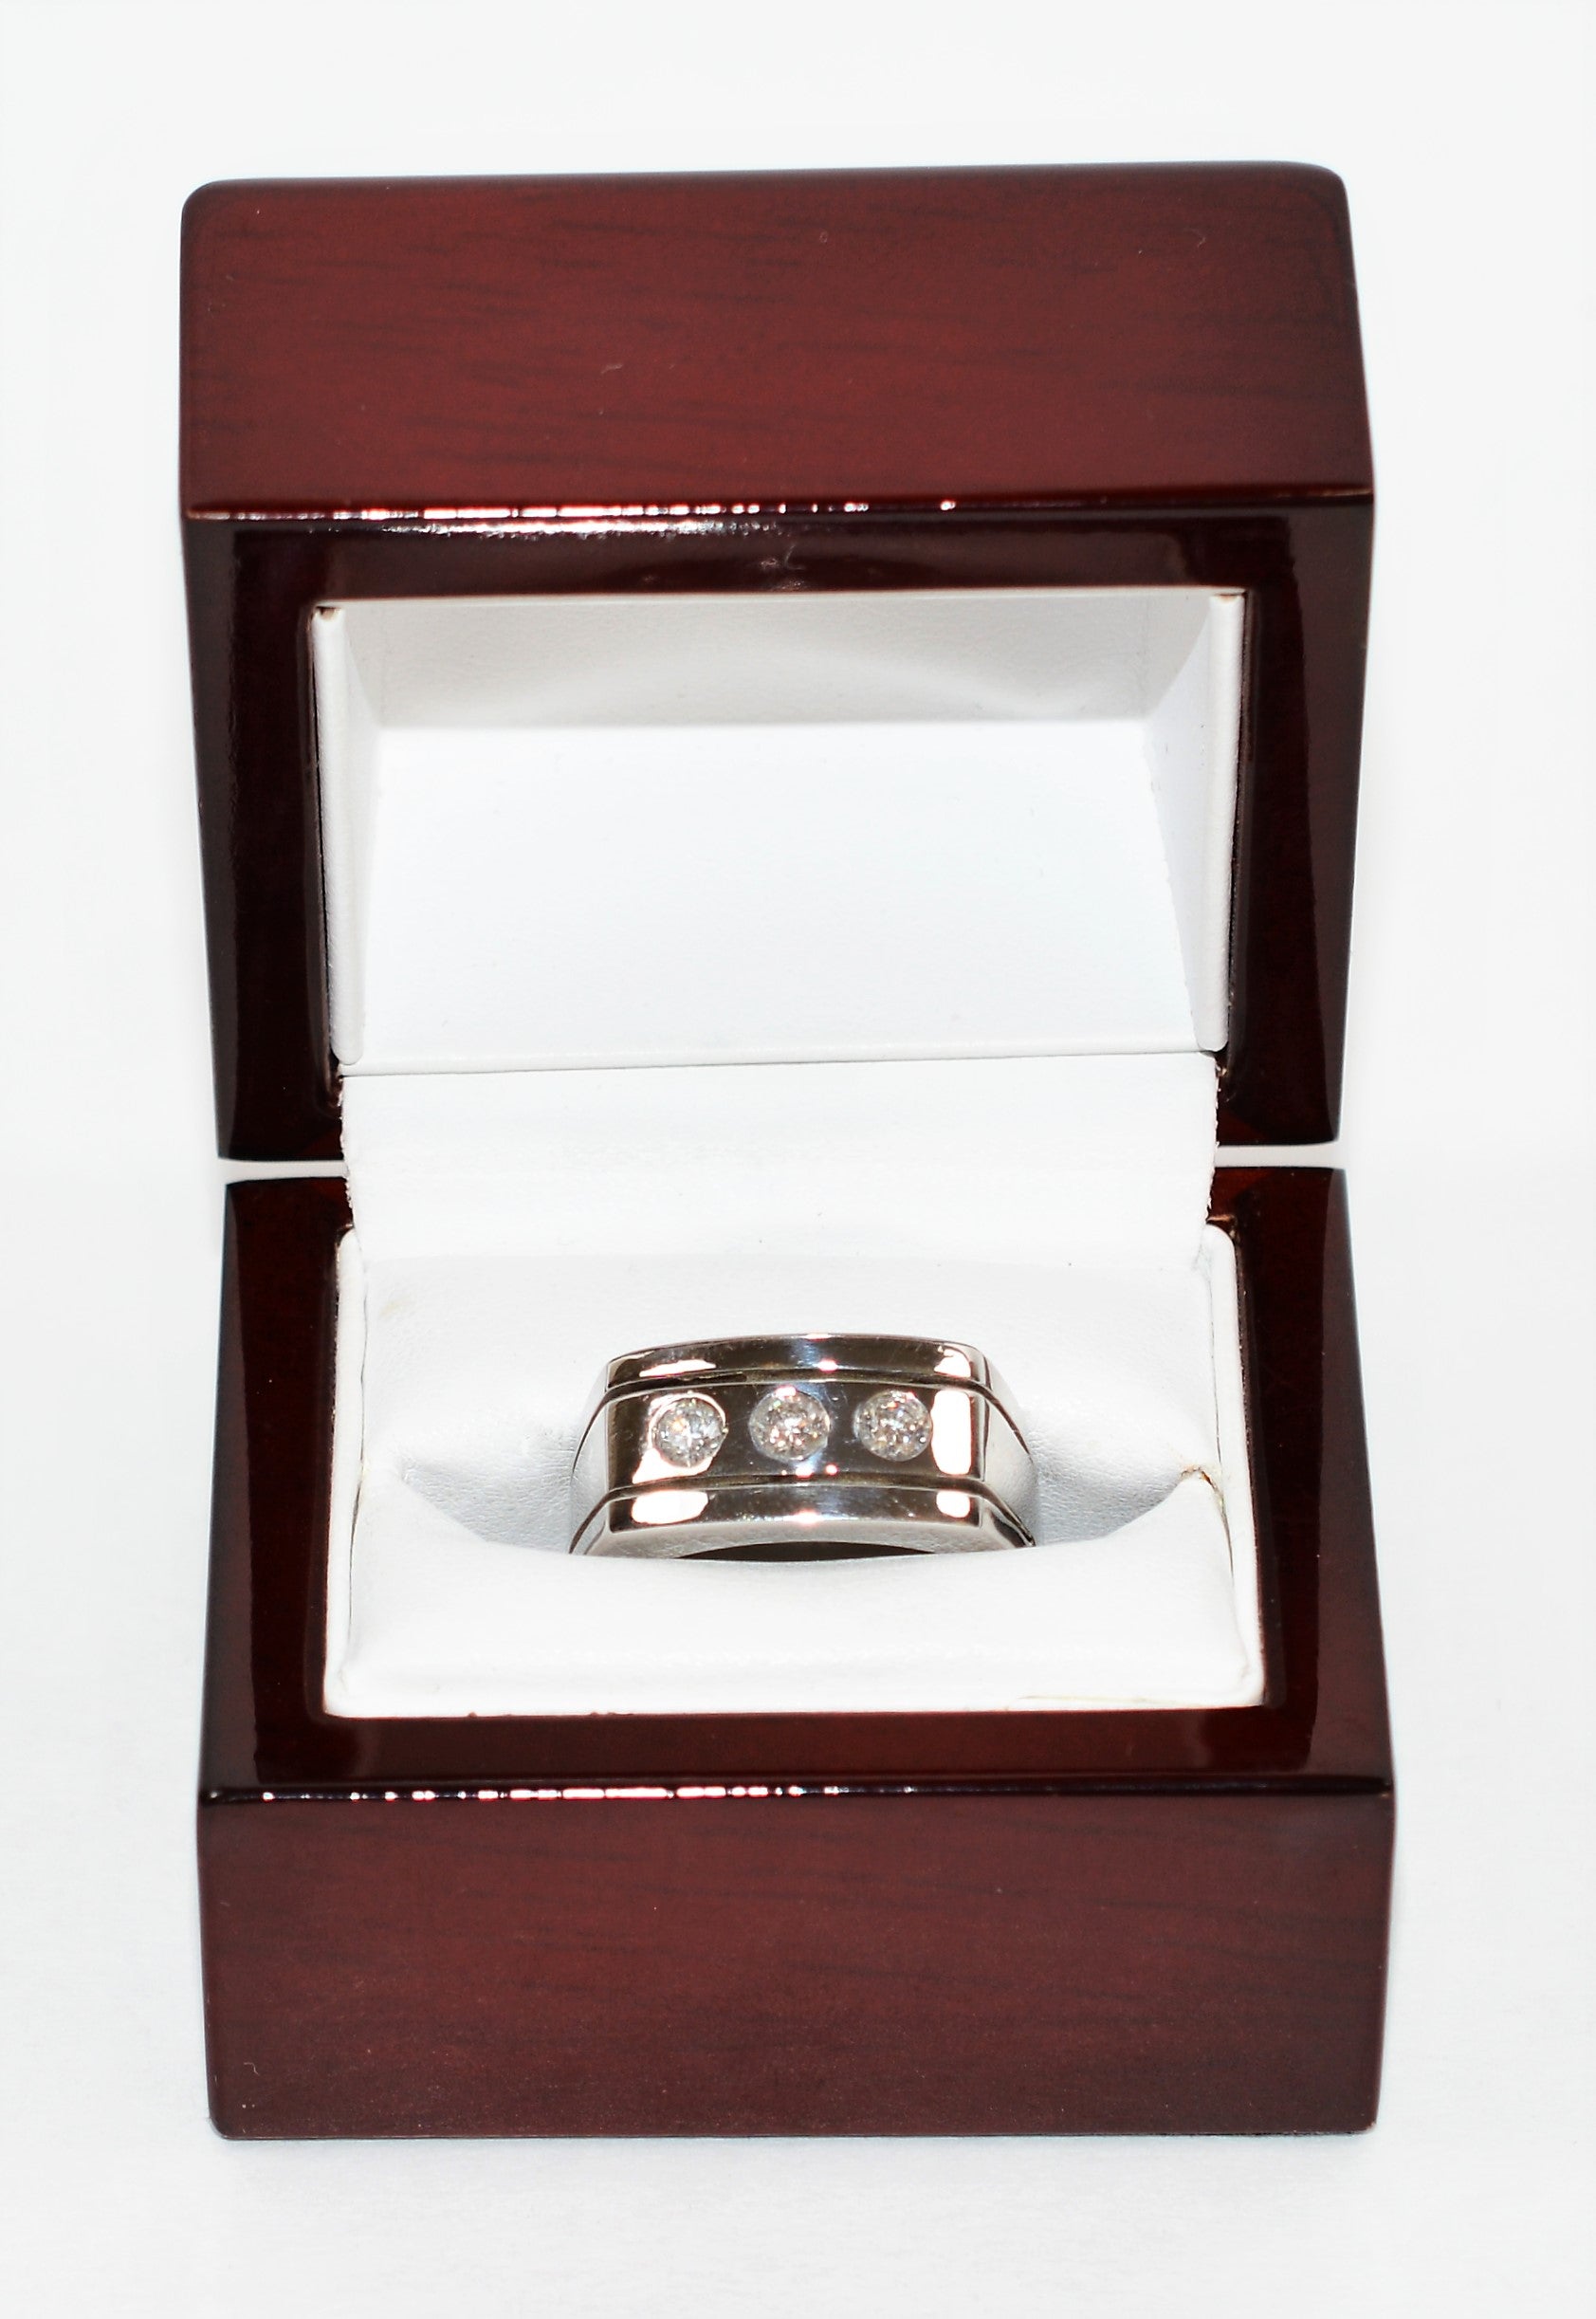 Natural Diamond Ring 14K Solid White Gold .69tcw Men's Ring Vintage Ring Cocktail Ring Statement Ring Bridal Jewelry Engagement Ring Wedding